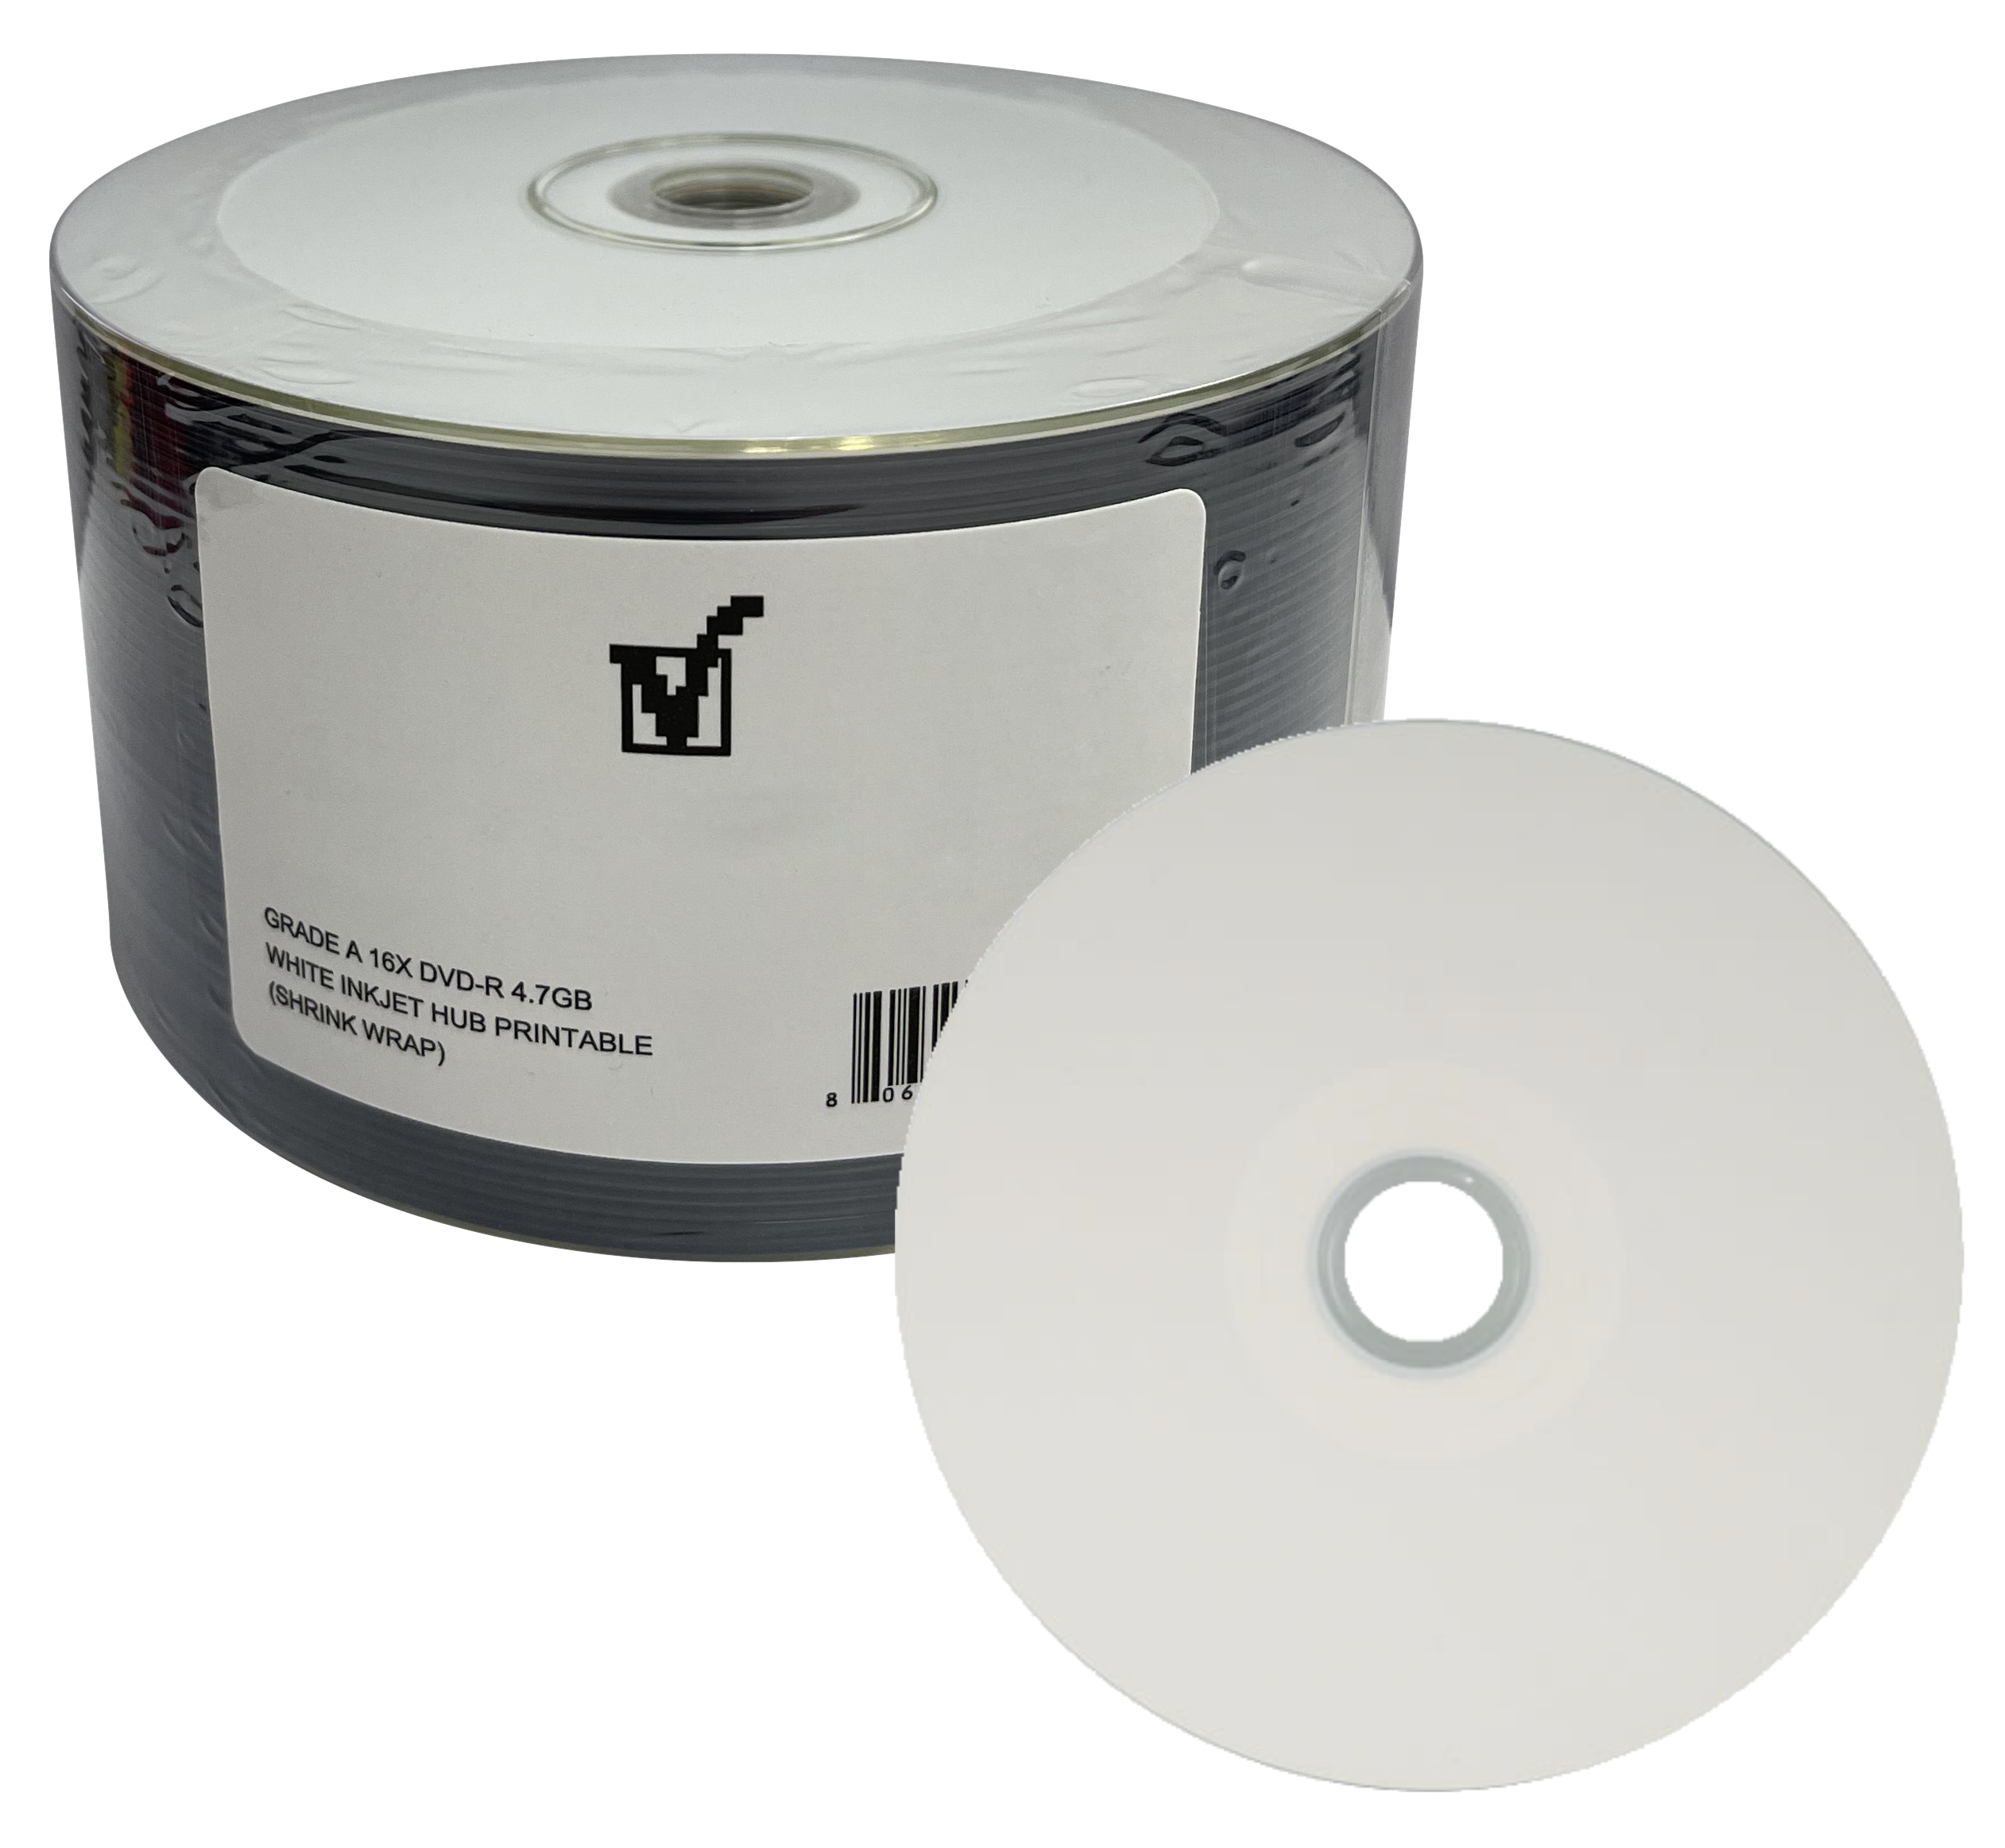 Image of ID 1214261518 1200 Grade A 16X DVD-R 47GB White Inkjet Hub Printable (Shrink Wrap)